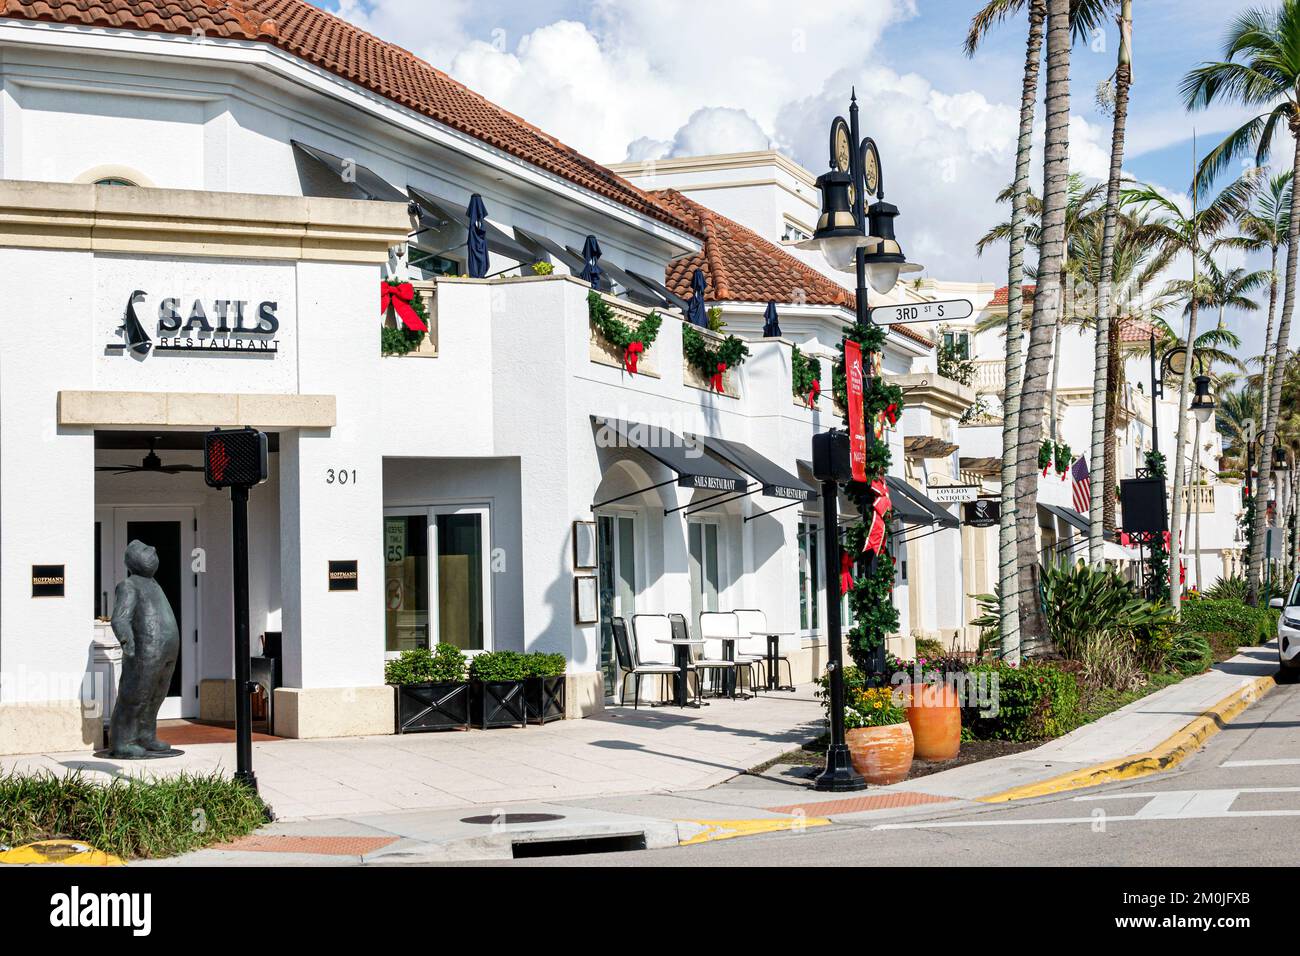 Naples Florida, 5. Fifth Avenue South, Gebäude vor dem Haupteingang, Sails Restaurant Restaurants Dining Dining out zwanglose Ca Stockfoto